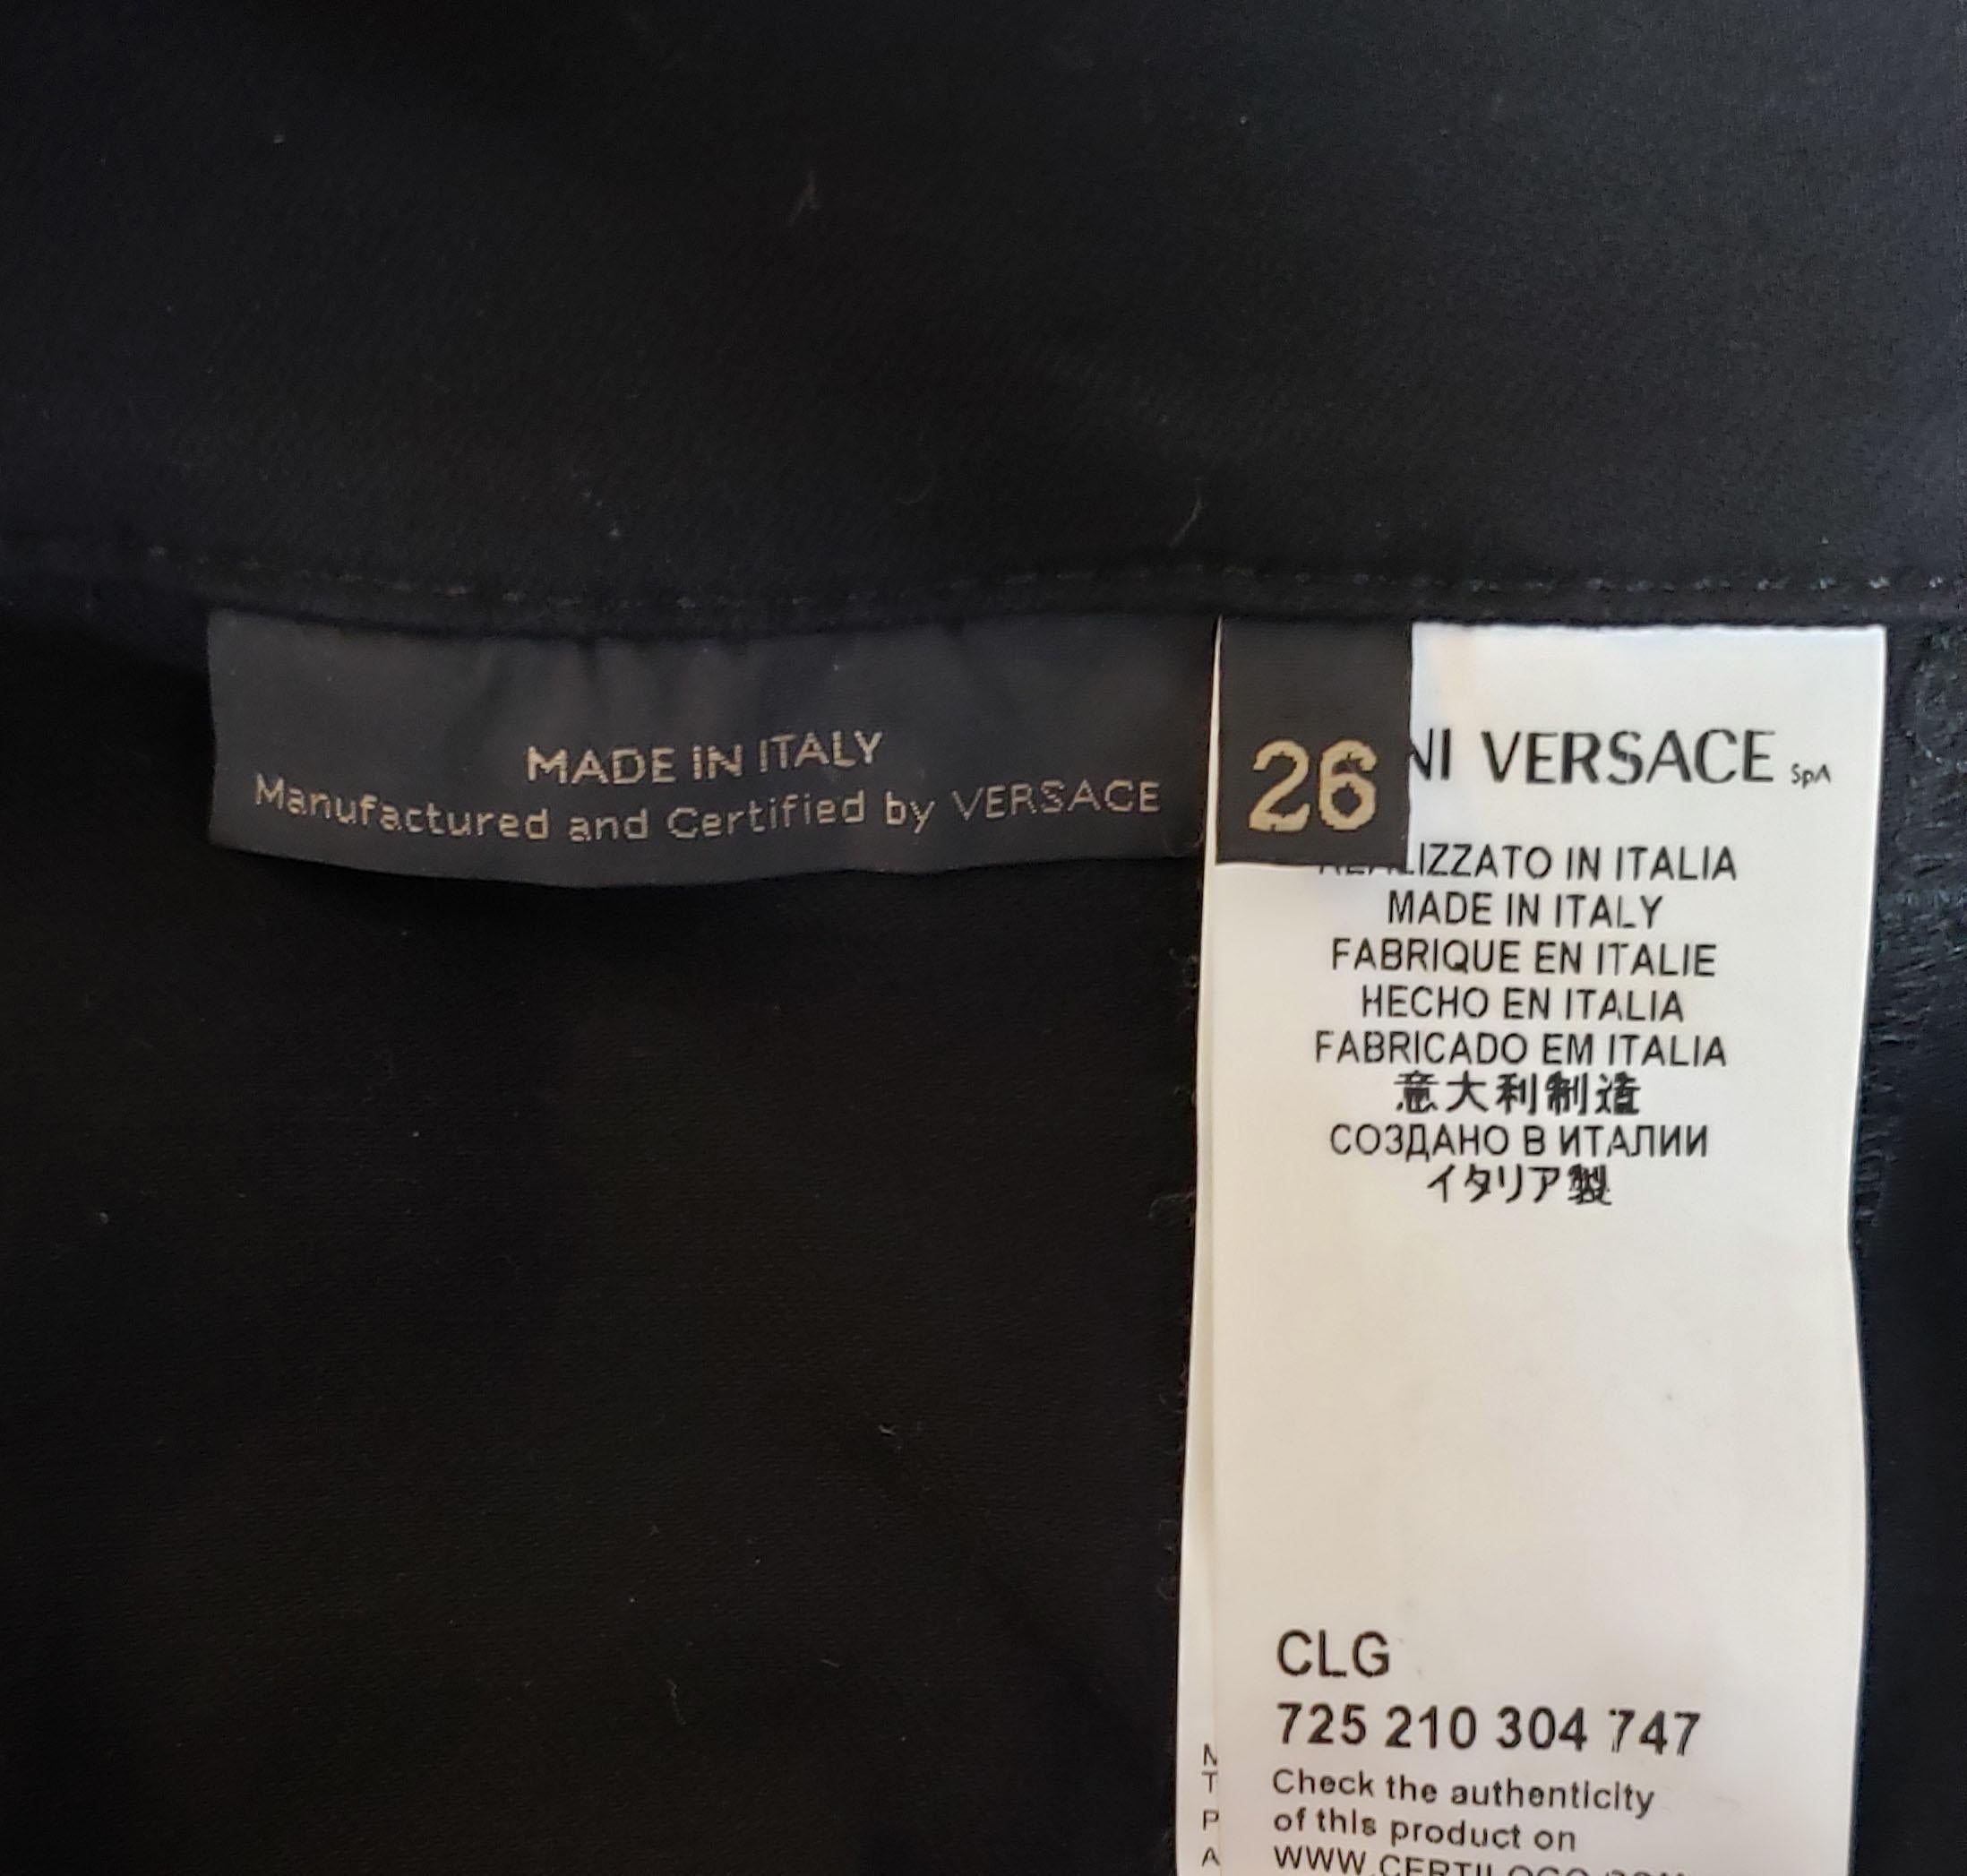 S/S 2013 Look # 15 VERSACE BLACK LACE PANNEL JEANS size 26 For Sale 3